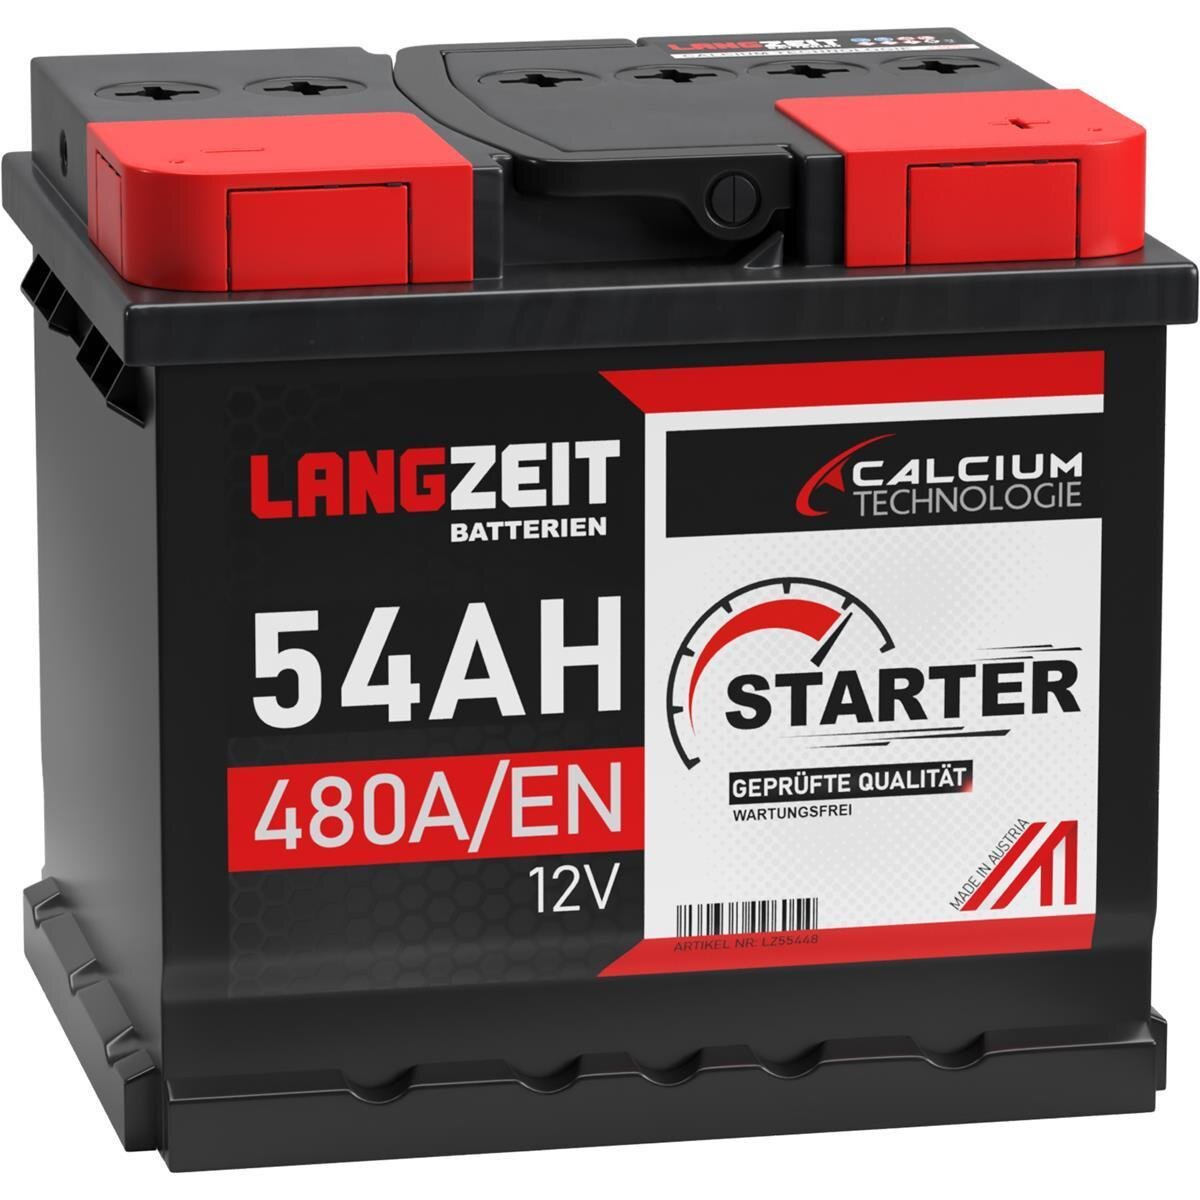 https://www.winnerbatterien.de/media/image/product/4068/lg/langzeit-starter-autobatterie-54ah-12v.jpg